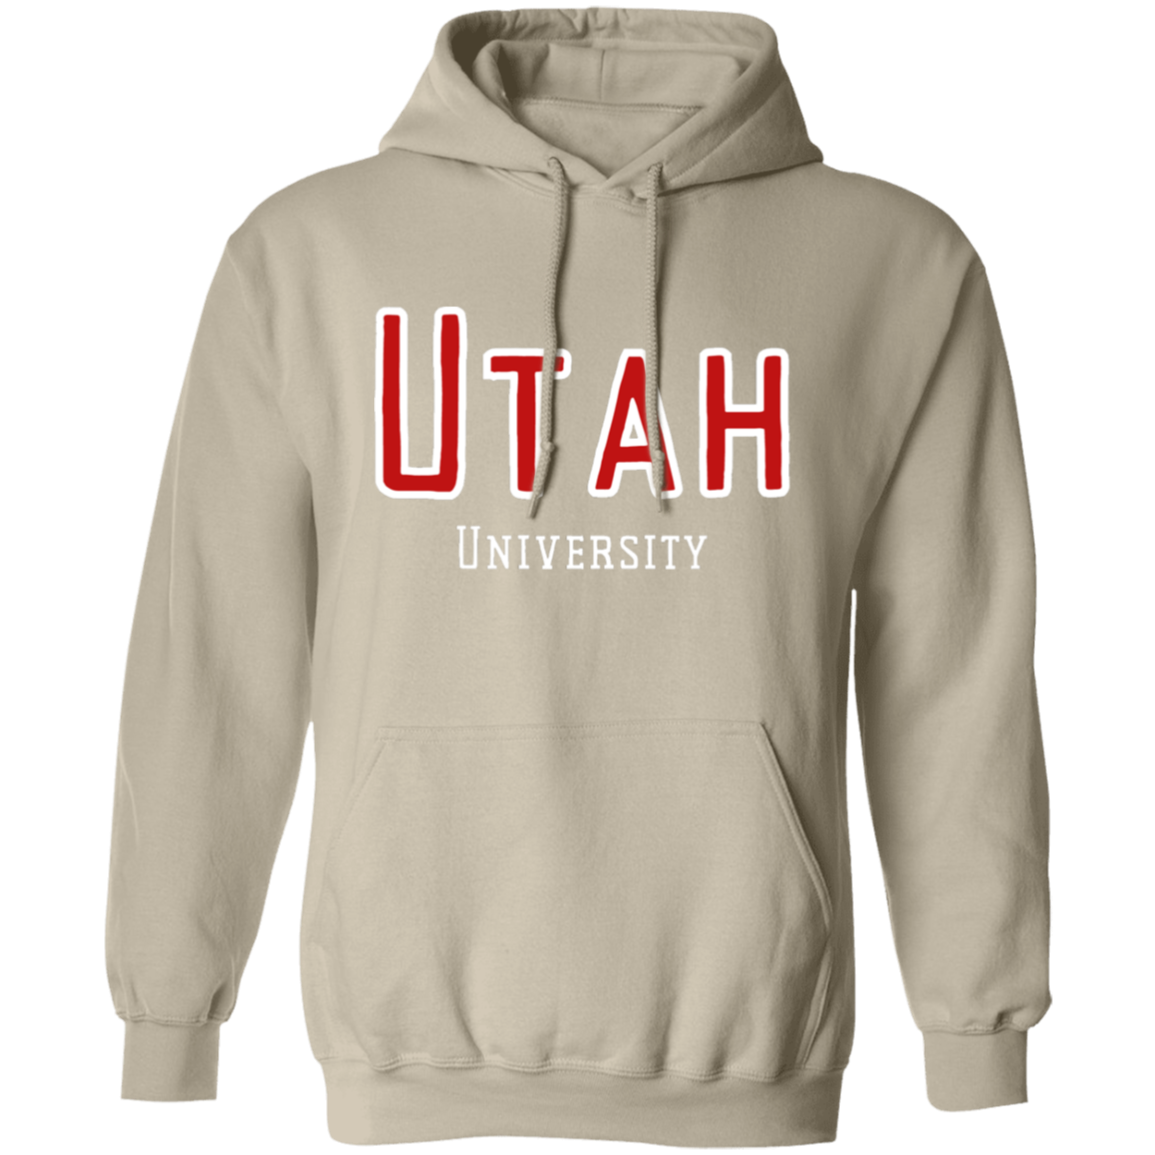 Utah University College Pullover Hoodie, Birthday Gift, Gift for Him, Her